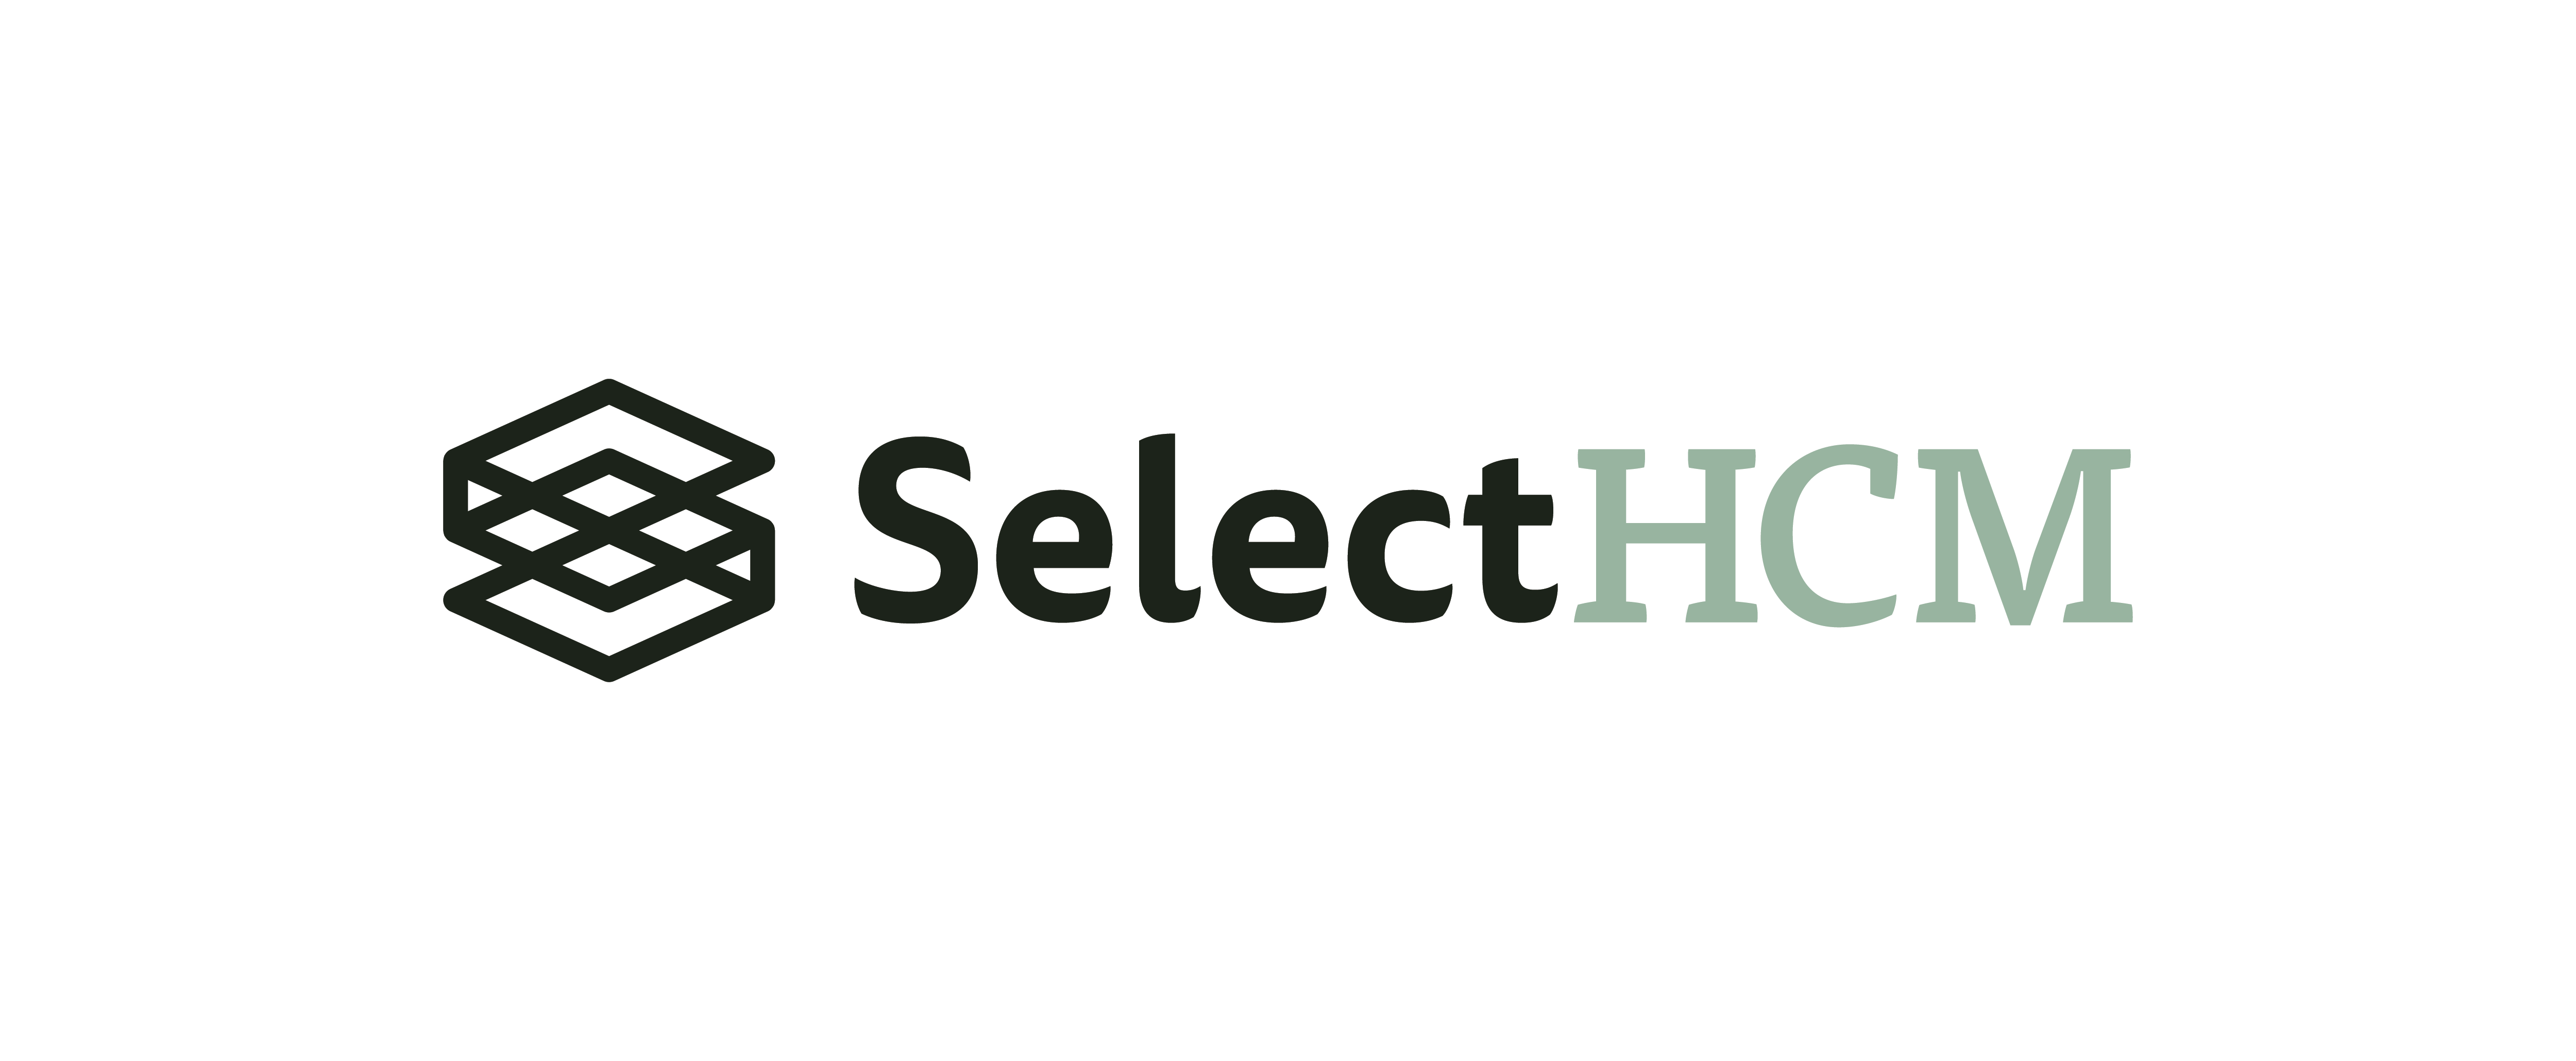 Select HCM logo